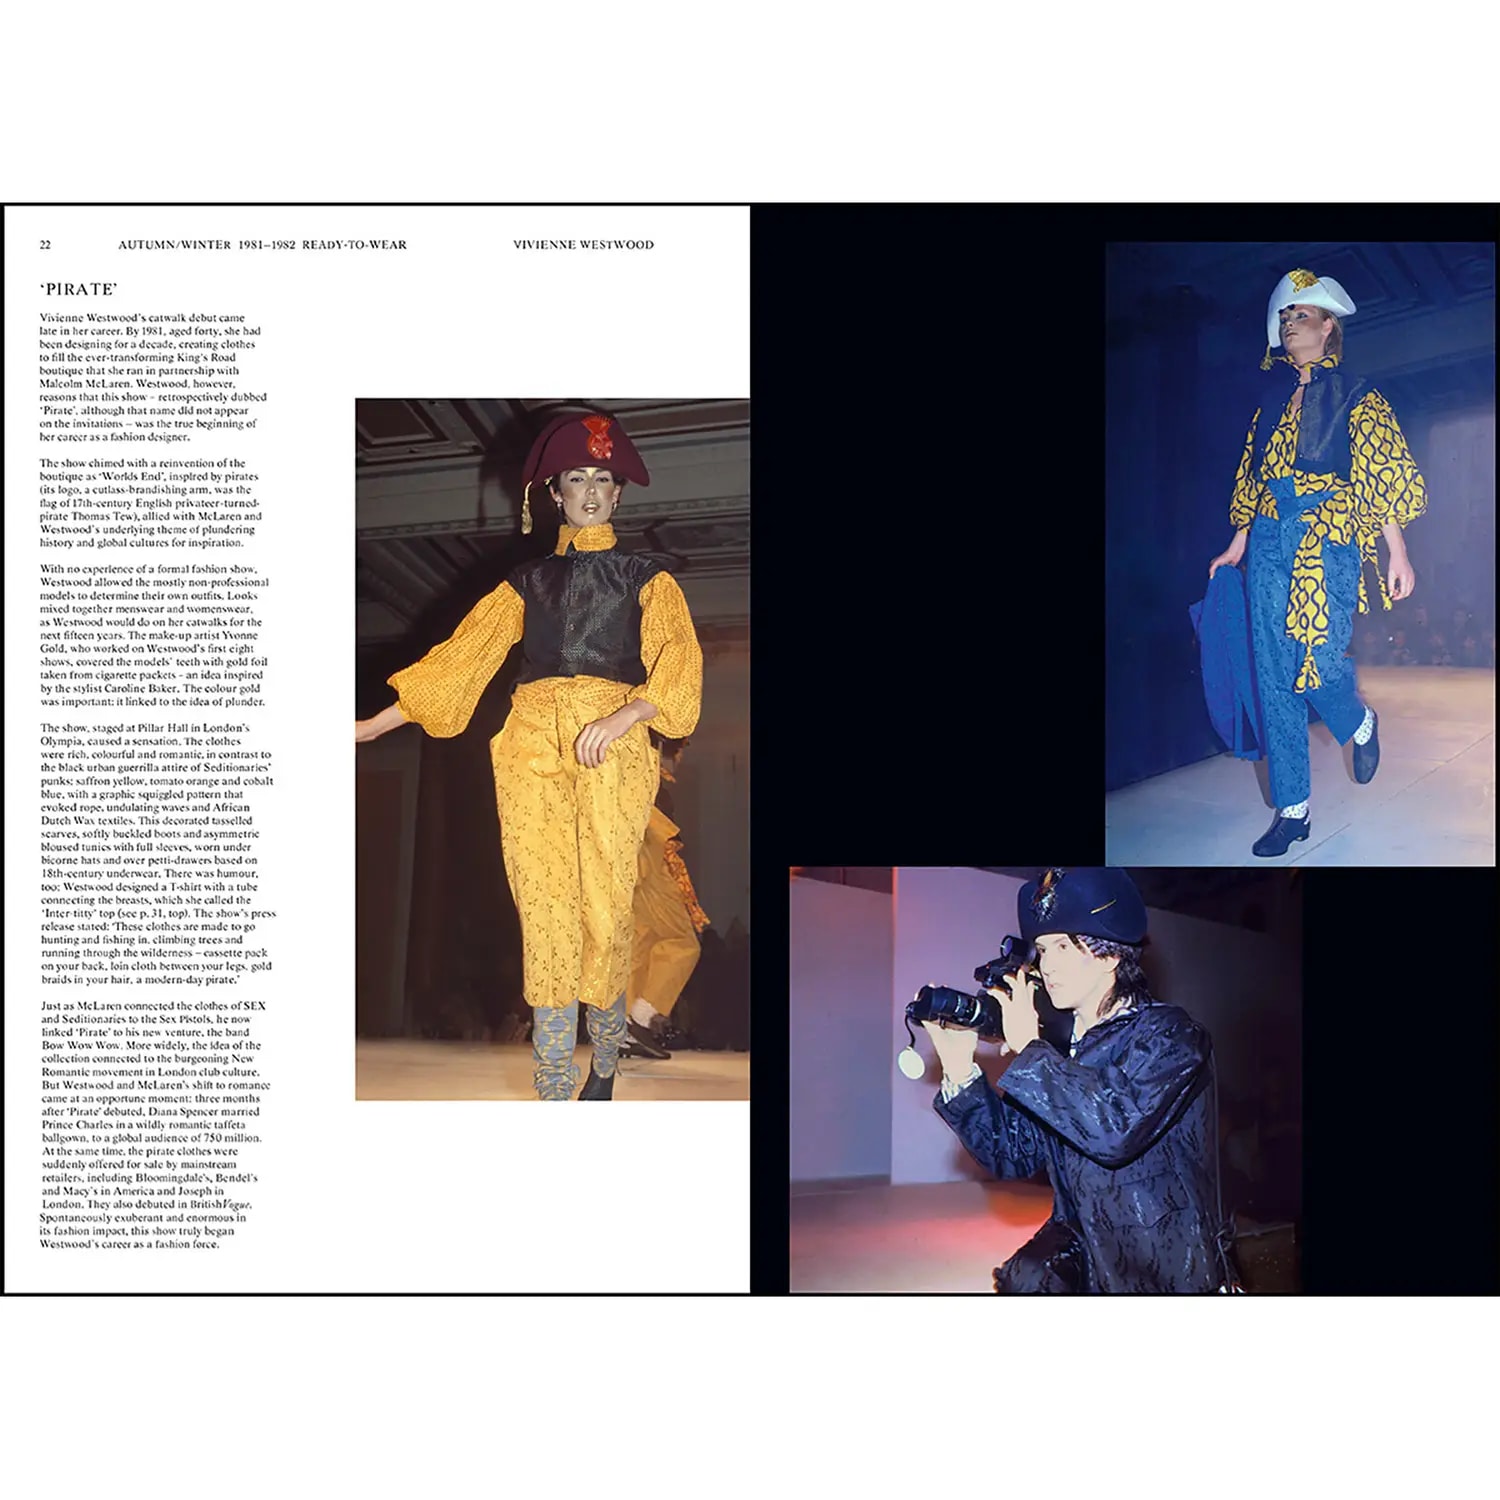 Thames and Hudson Ltd Vivienne Westwood Catwalk - The Complete Fashion  Collections - Shop - bhibu